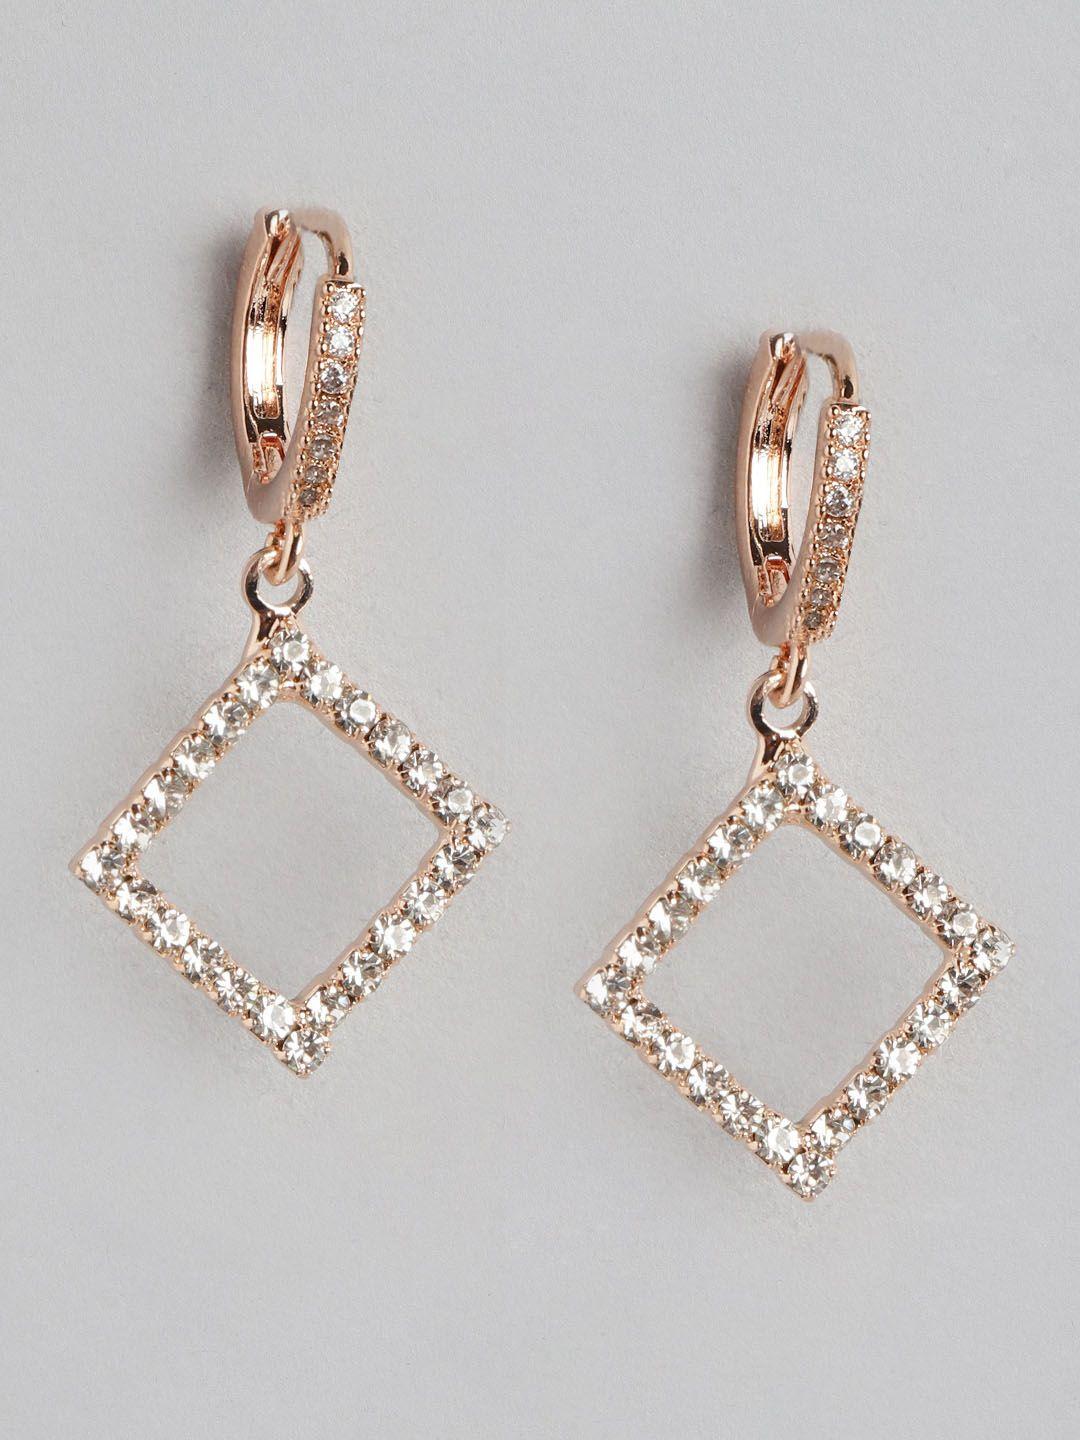 aadvik designs rose gold-plated ad studded geometric studs earrings